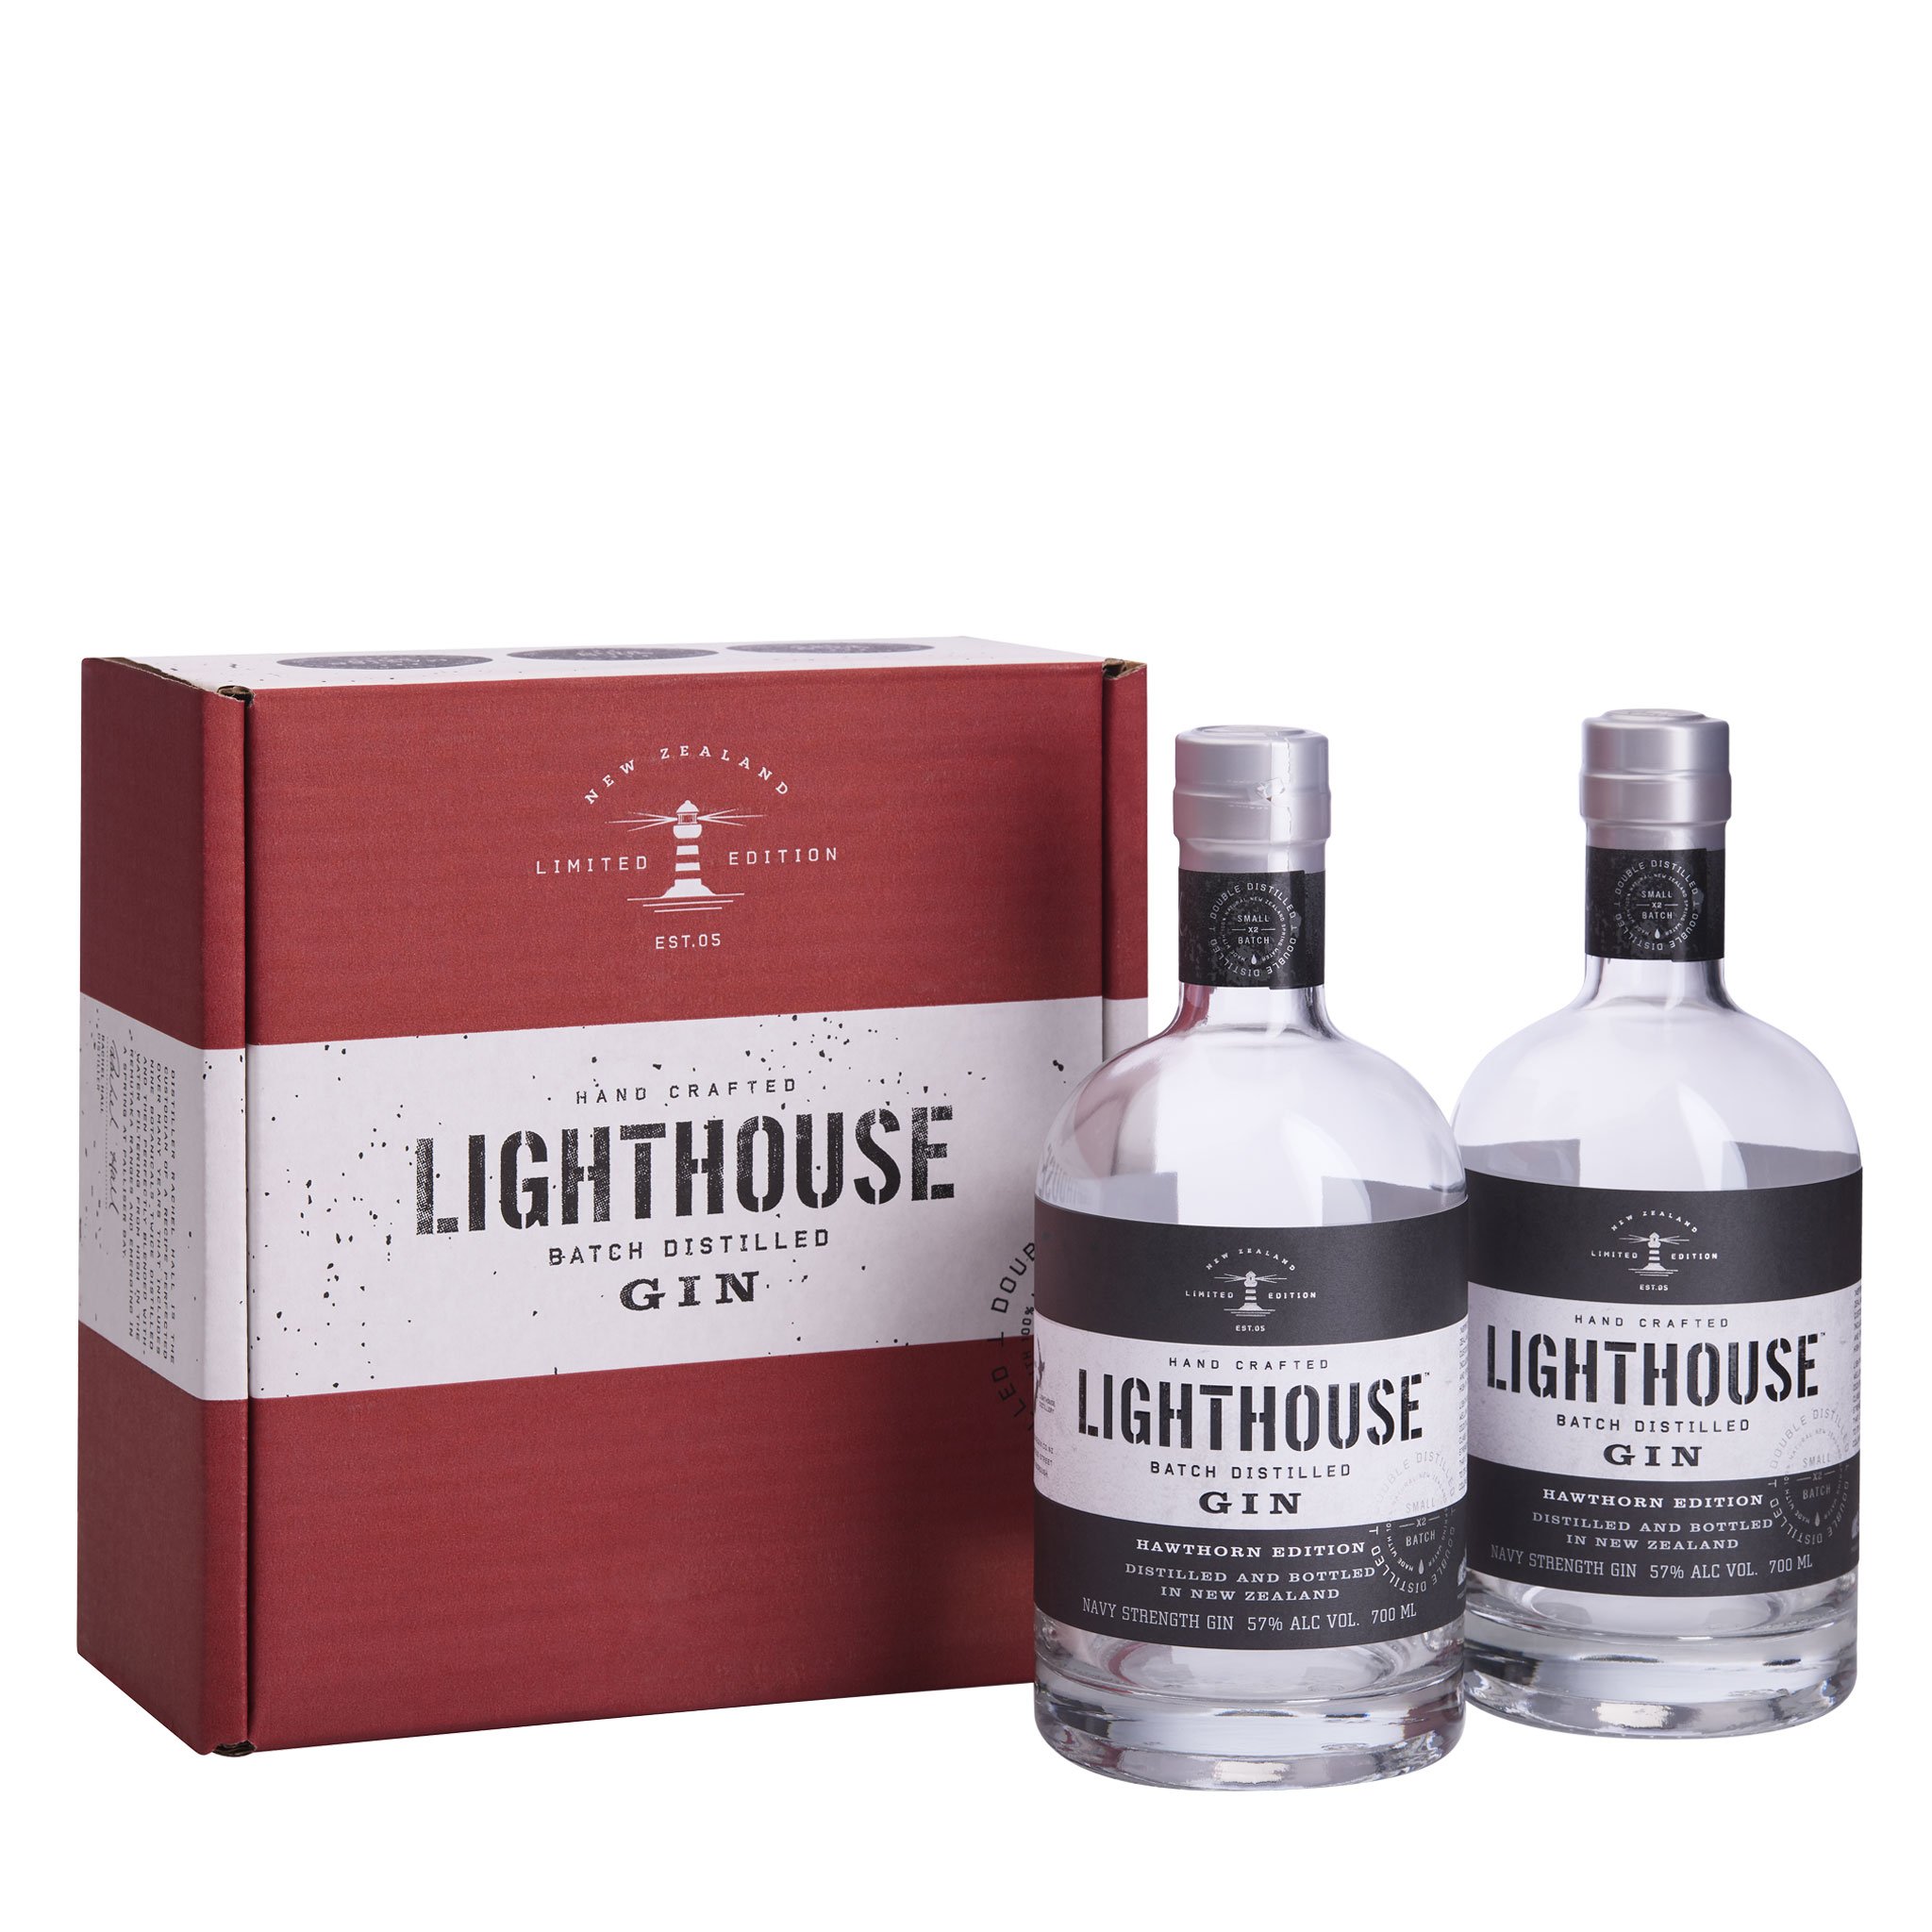 Lighthouse Gin Hawthorn Edition 2 700 ml bottles 